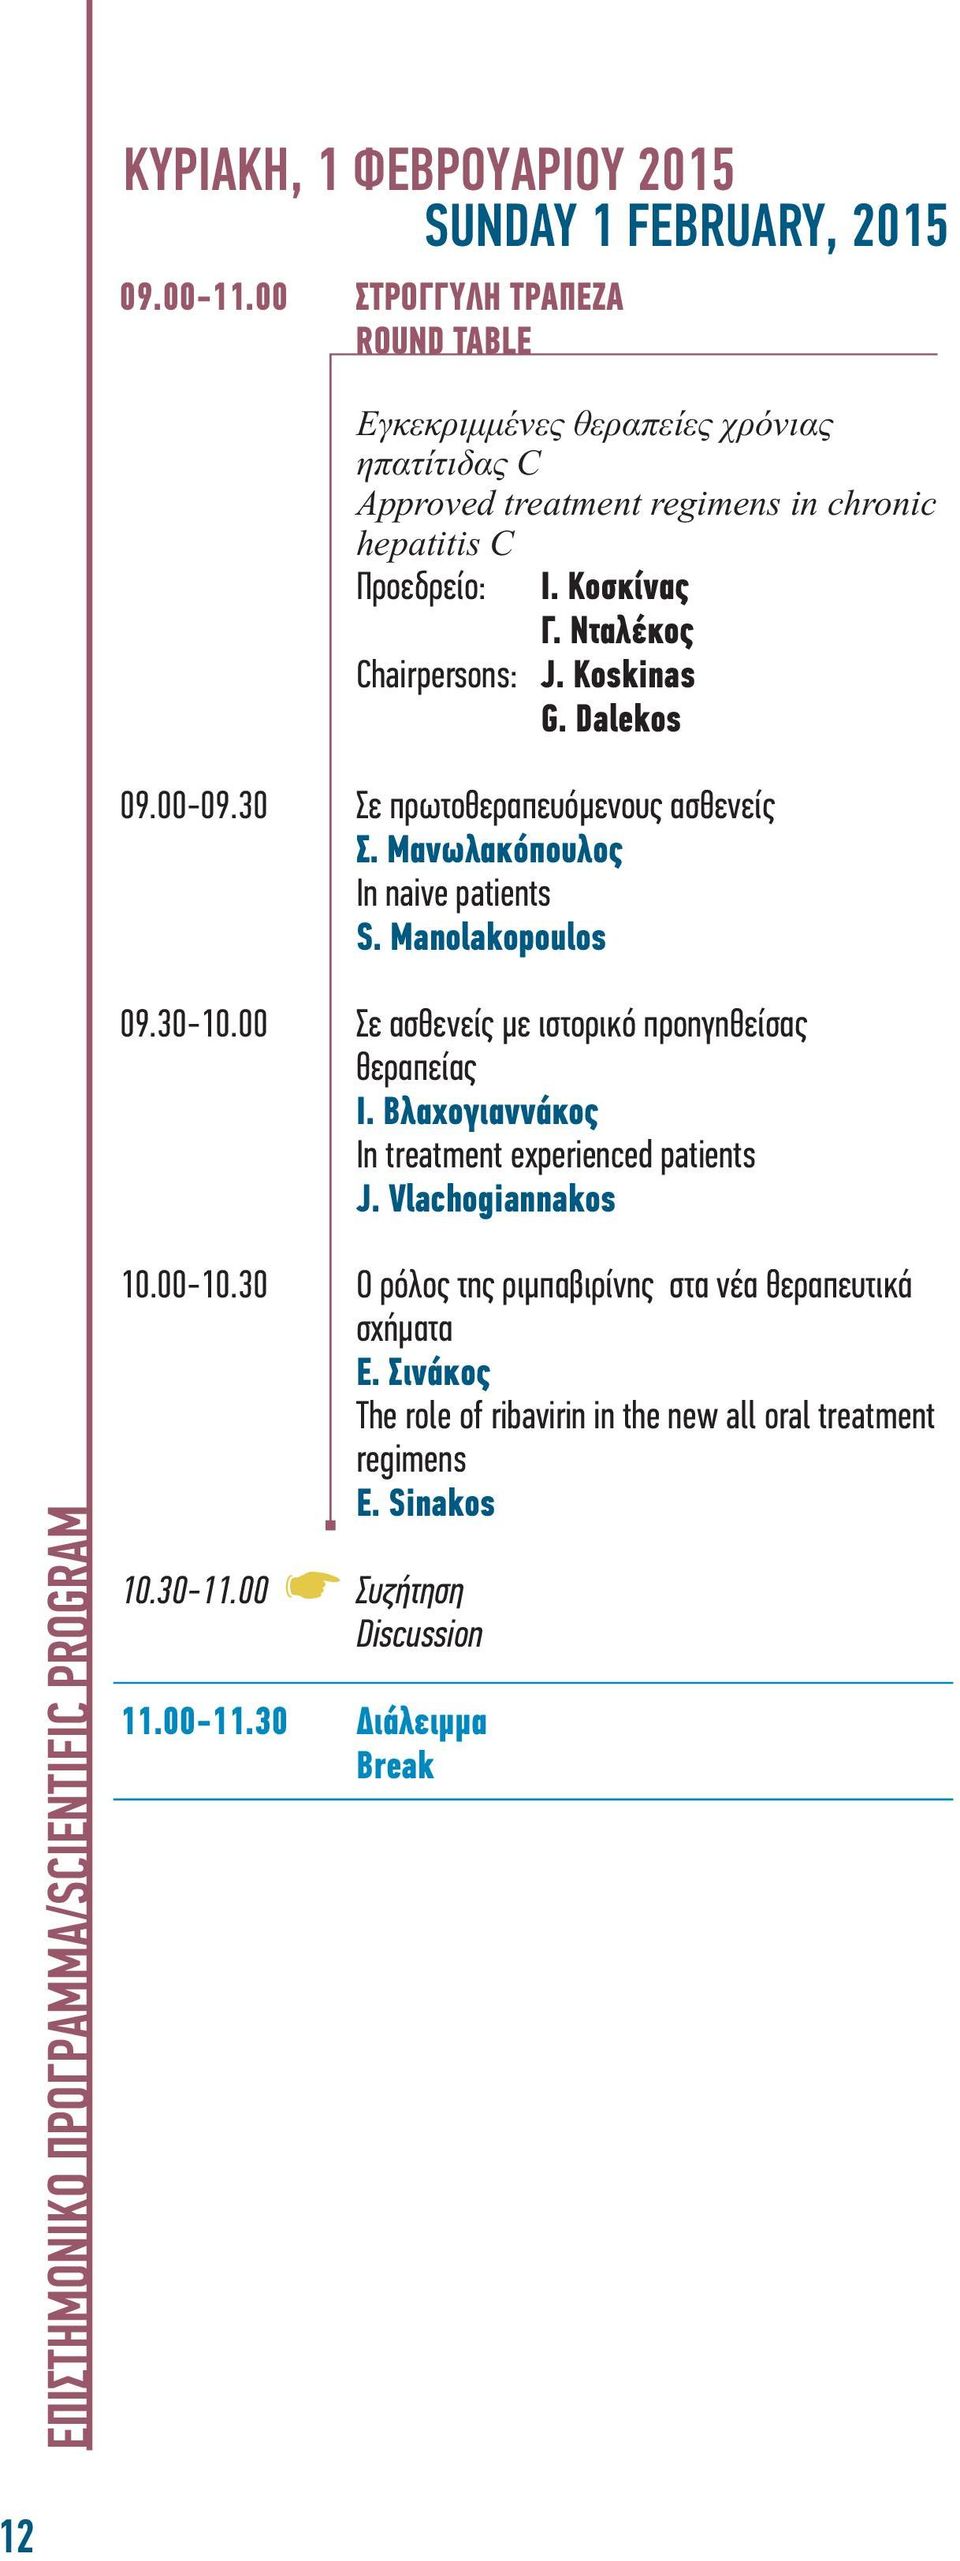 Koskinas G. Dalekos 09.00-09.30 Σε πρωτοθεραπευόμενους ασθενείς Σ. Μανωλακόπουλος In naive patients S. Manolakopoulos 09.30-10.00 Σε ασθενείς με ιστορικό προηγηθείσας θεραπείας Ι.